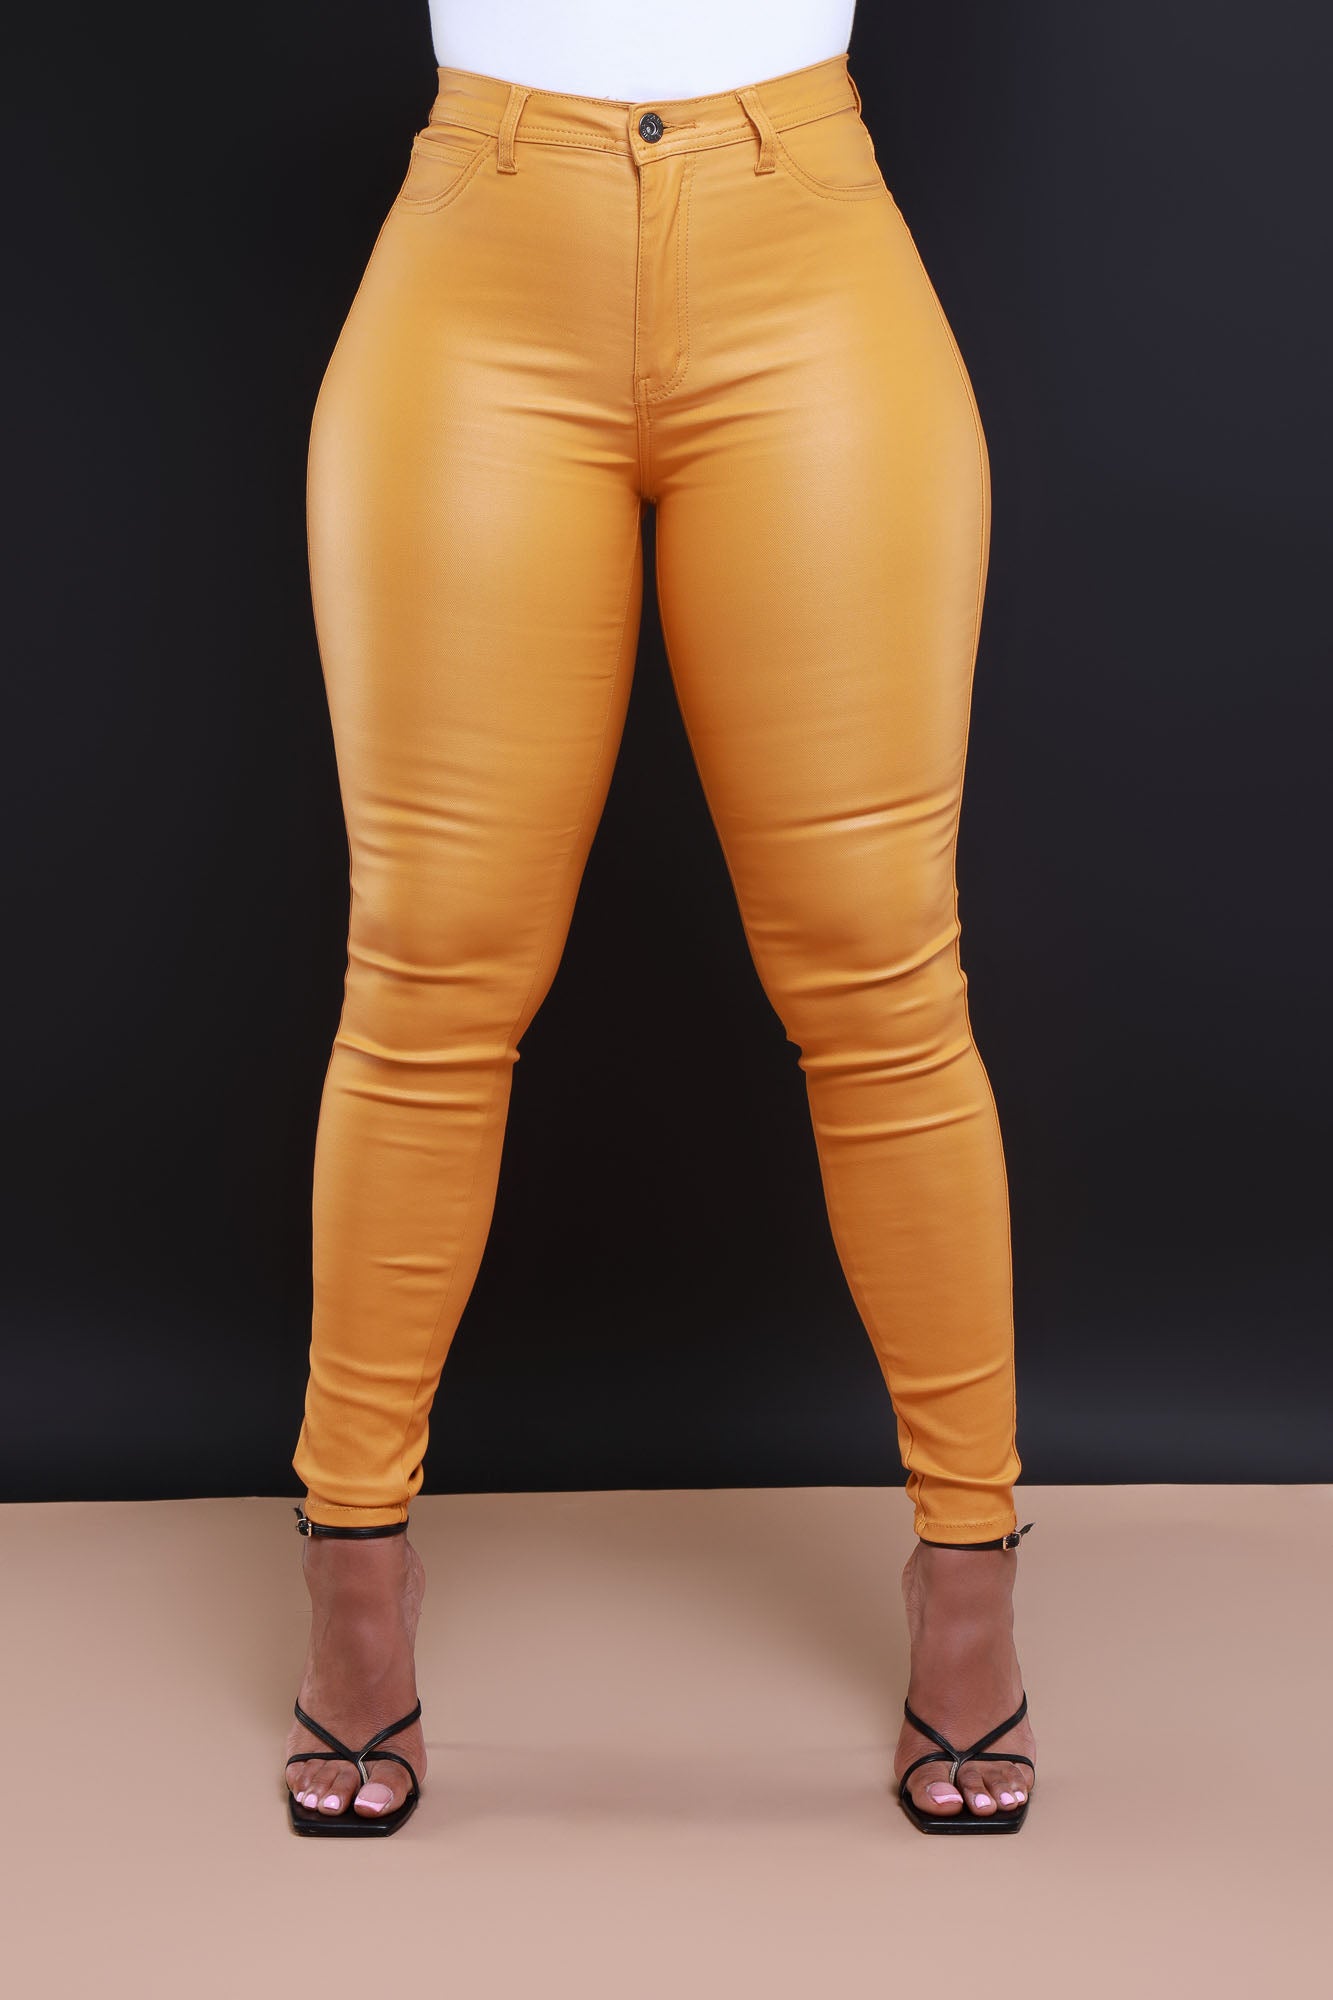 Girlfriend Collective Mustard Tan High Rise Leggings w/Pockets M 